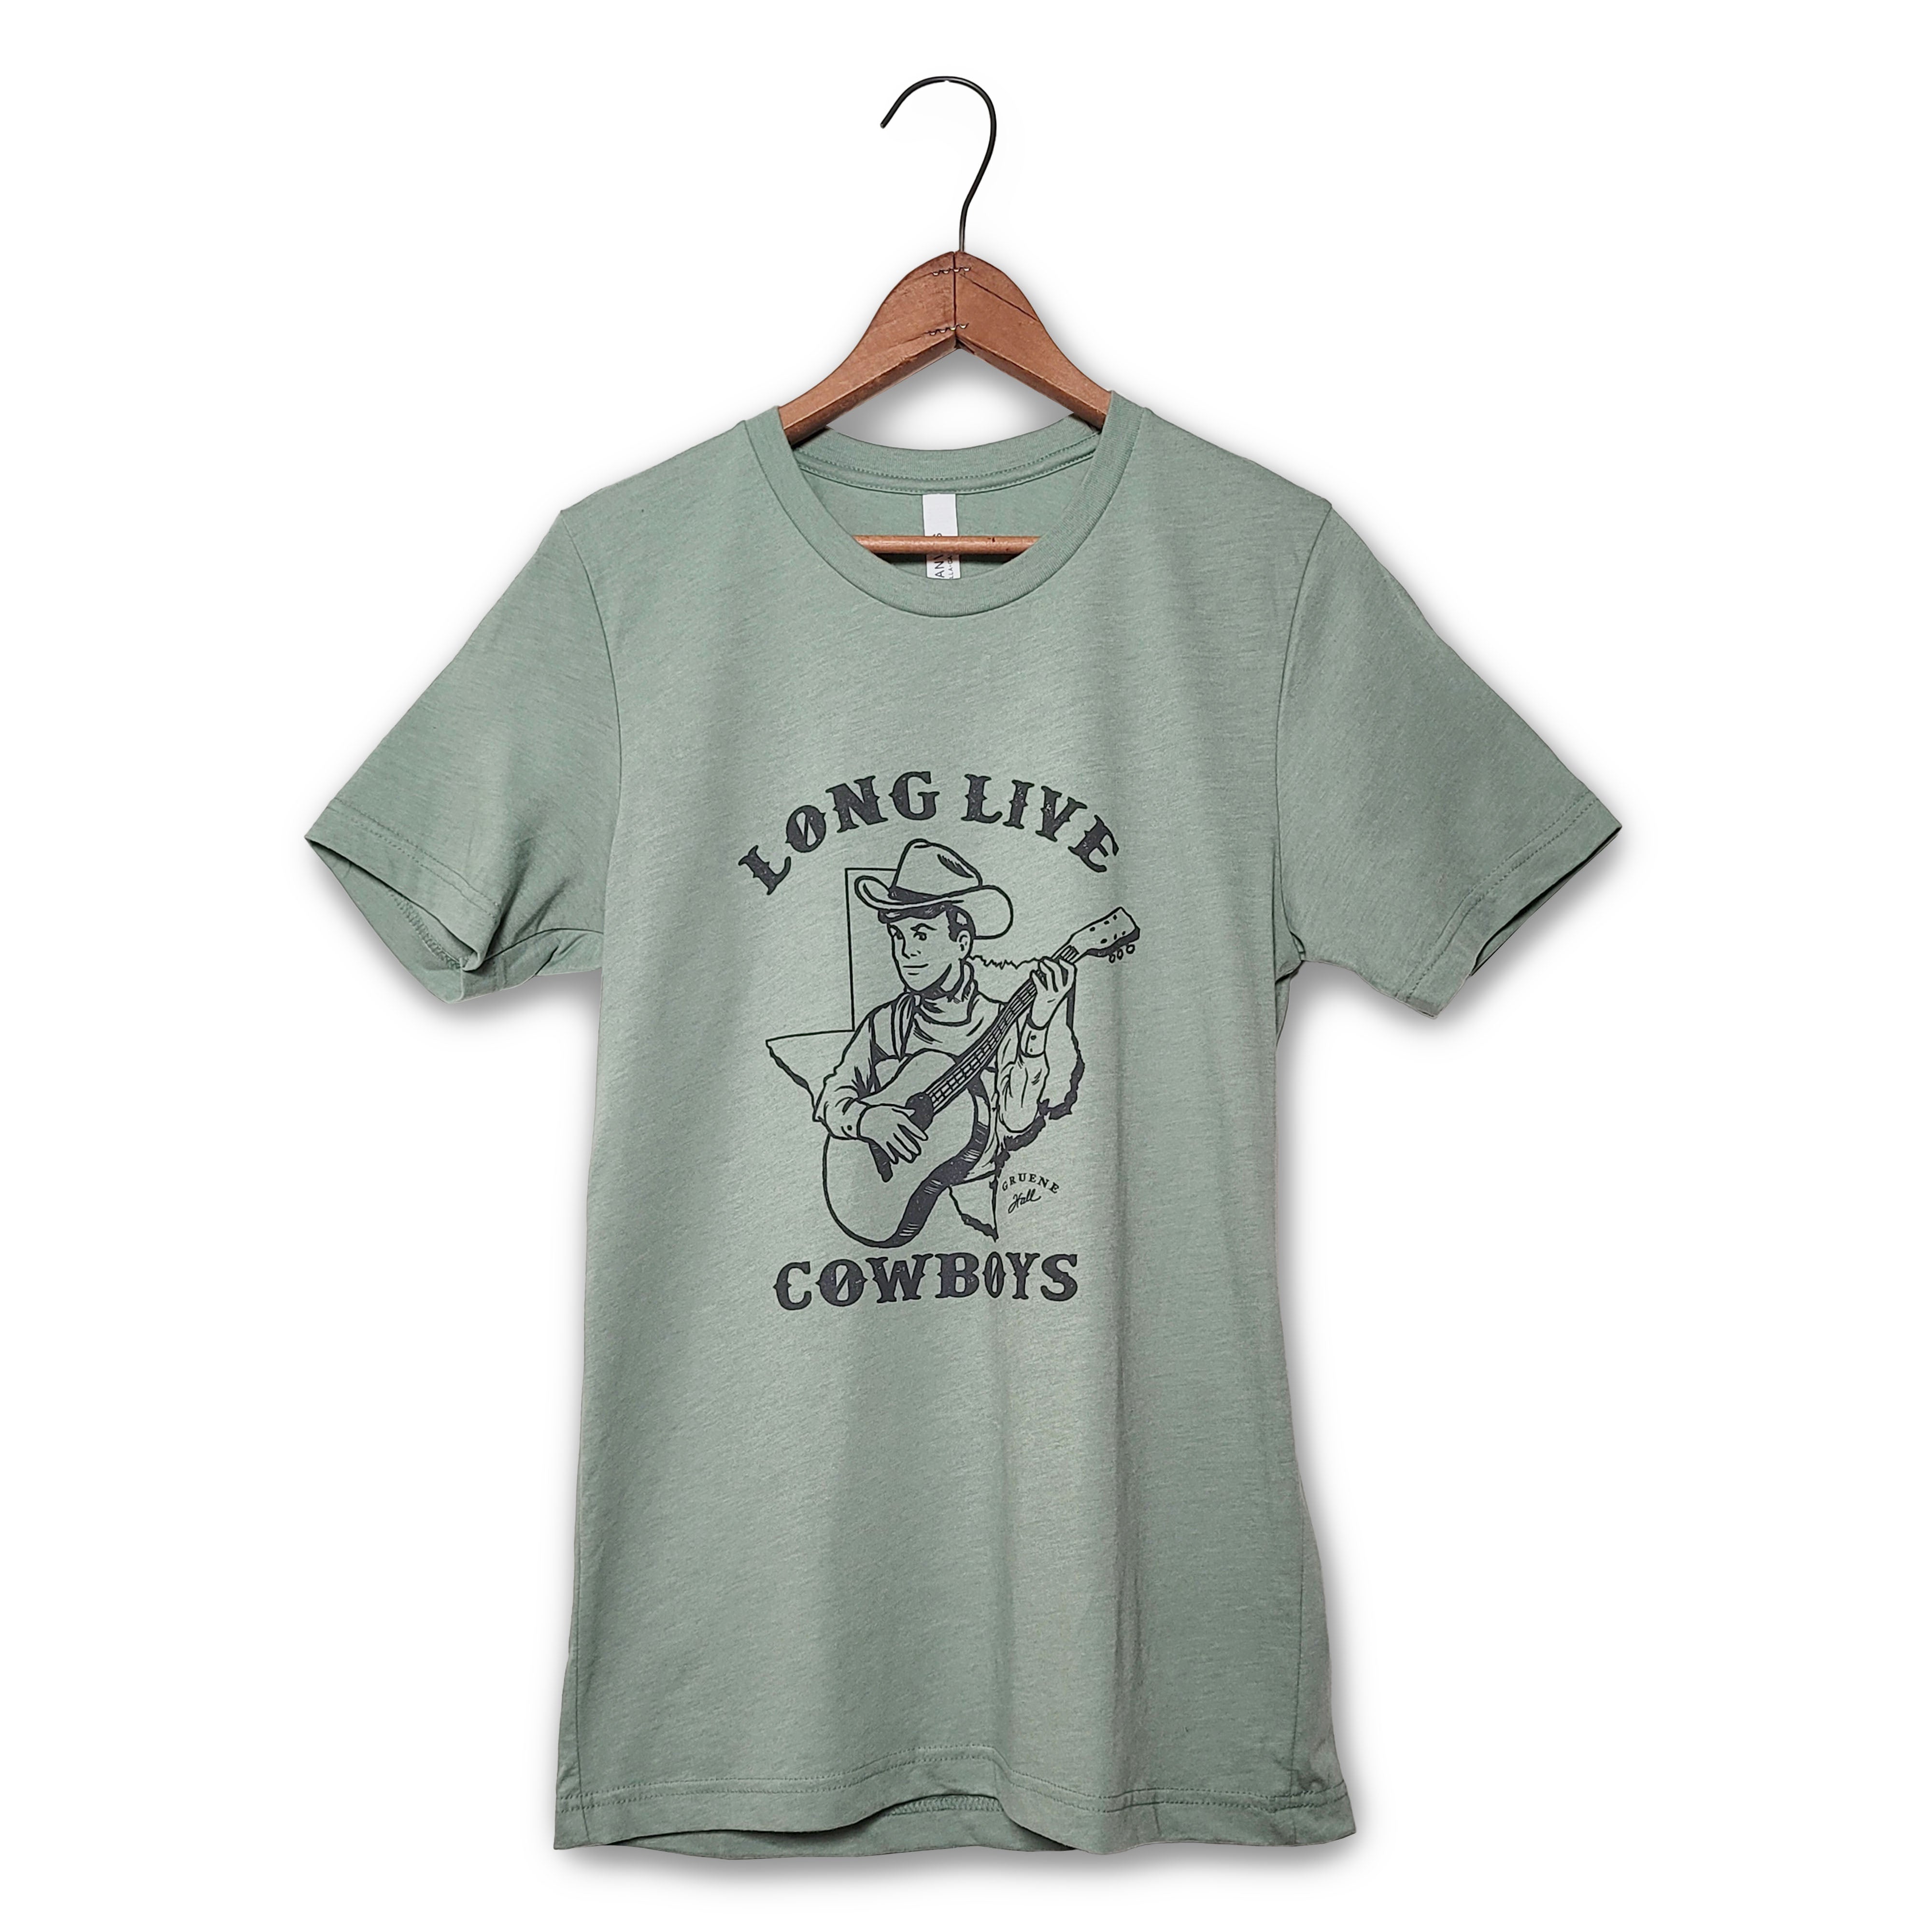 Cotton Eyed Joe's | Gruene Hall Long Live Cowboys Tee